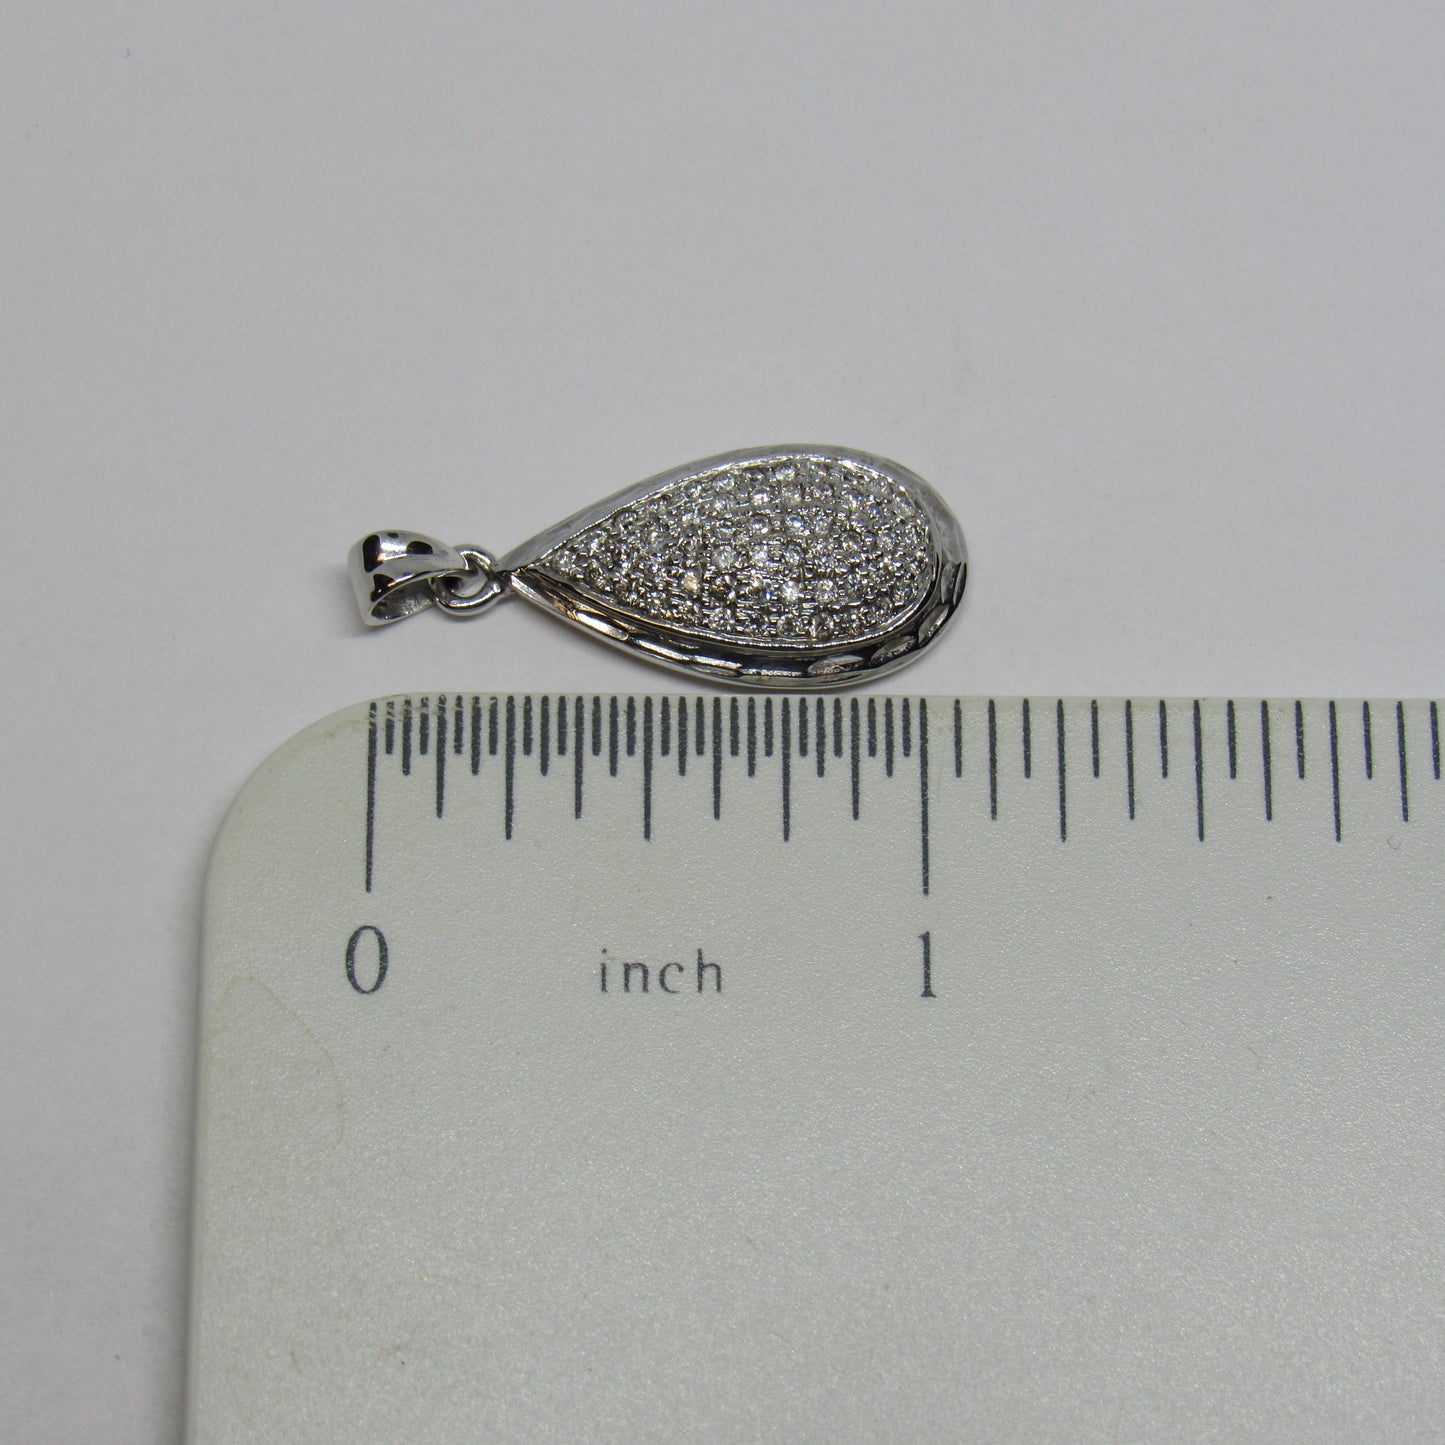 18k White Gold Pear Teardrop Shaped Diamond Pendant - ~1.25 inch